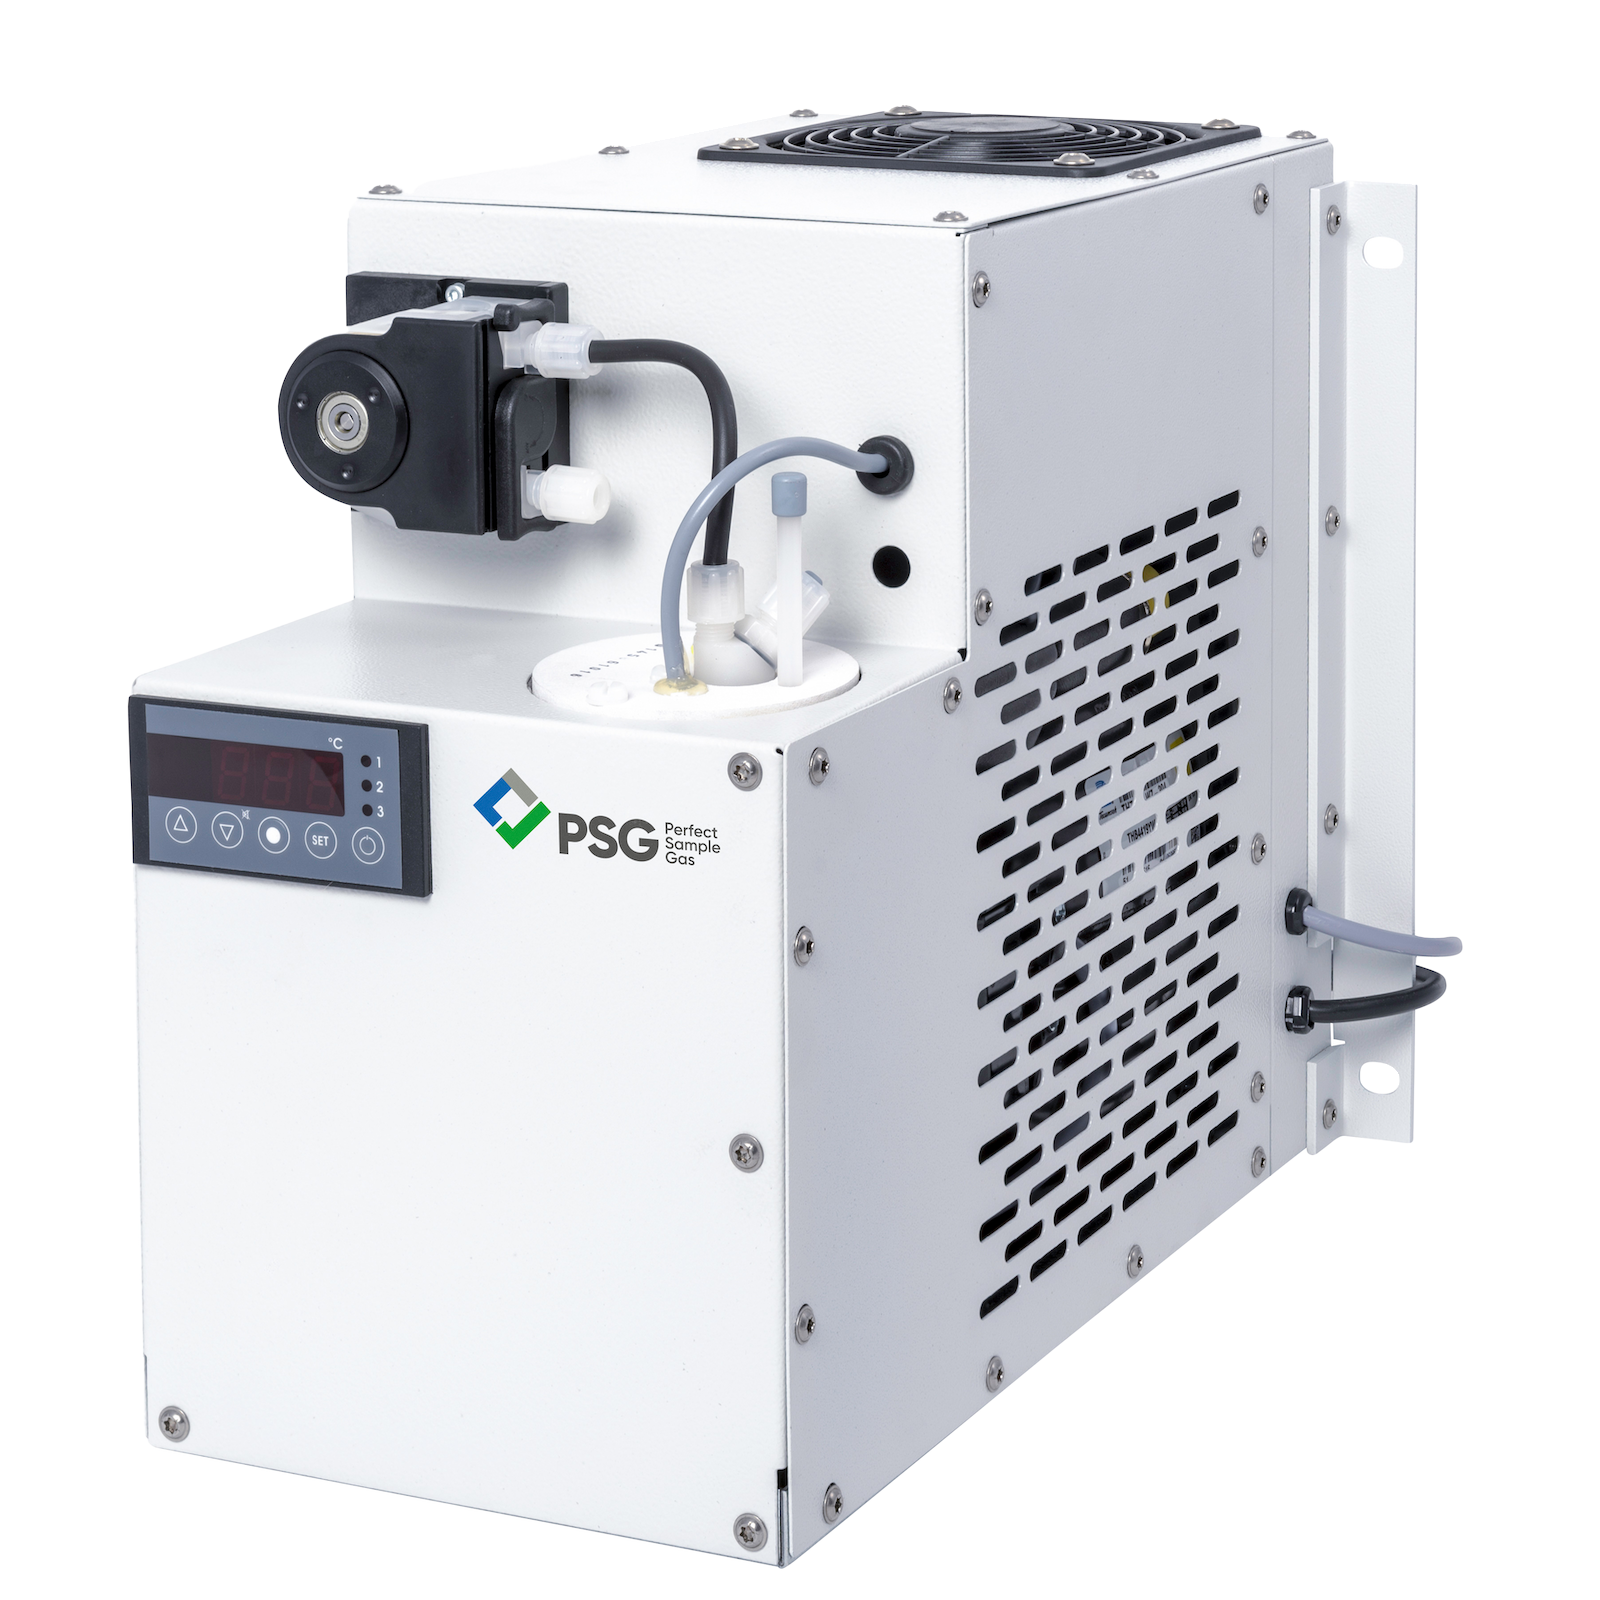 PSG MAK Process BCR01 Gas Conditioner